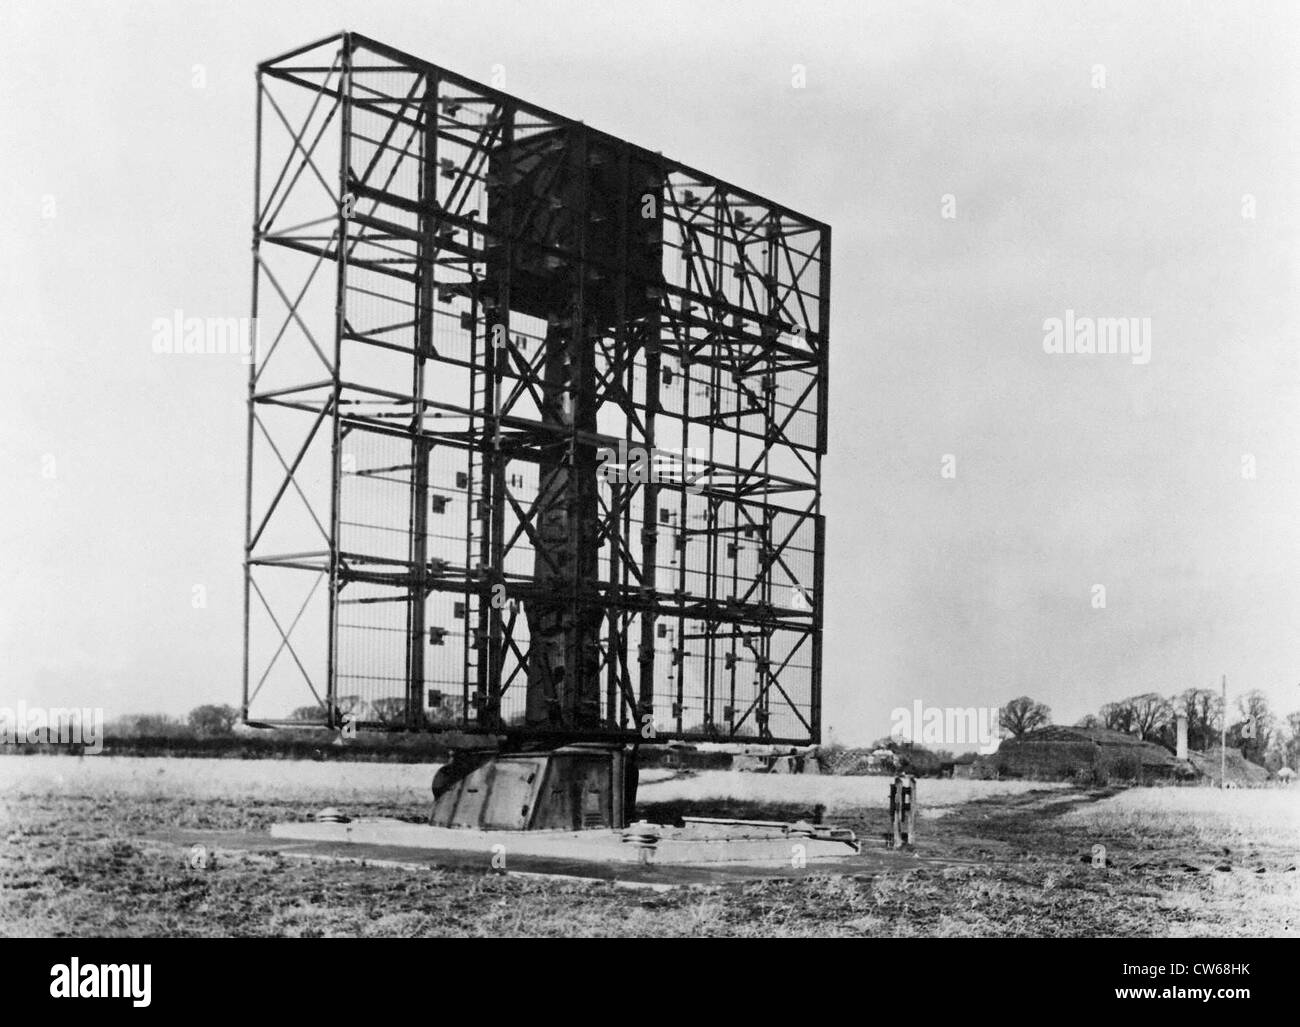 Total 49+ imagen radares segunda guerra mundial - Abzlocal.mx